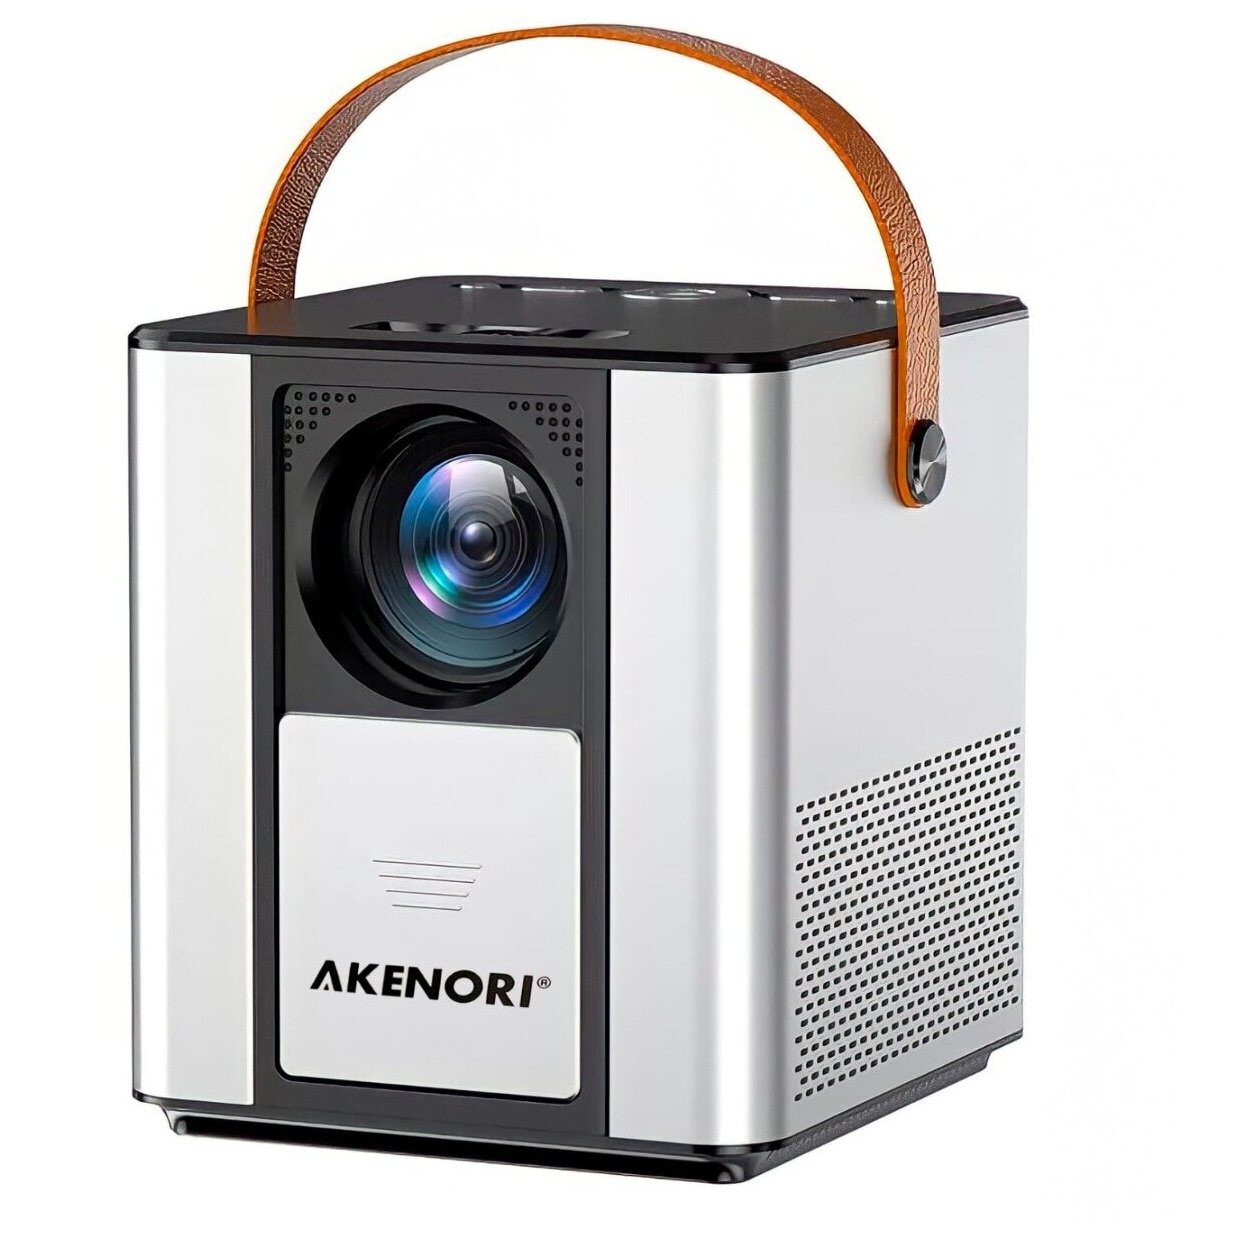 Проектор мультимедийный Wi-Fi Akenori LED-888P Miracast, кино проектор, проектор для фильмов, мини проектор